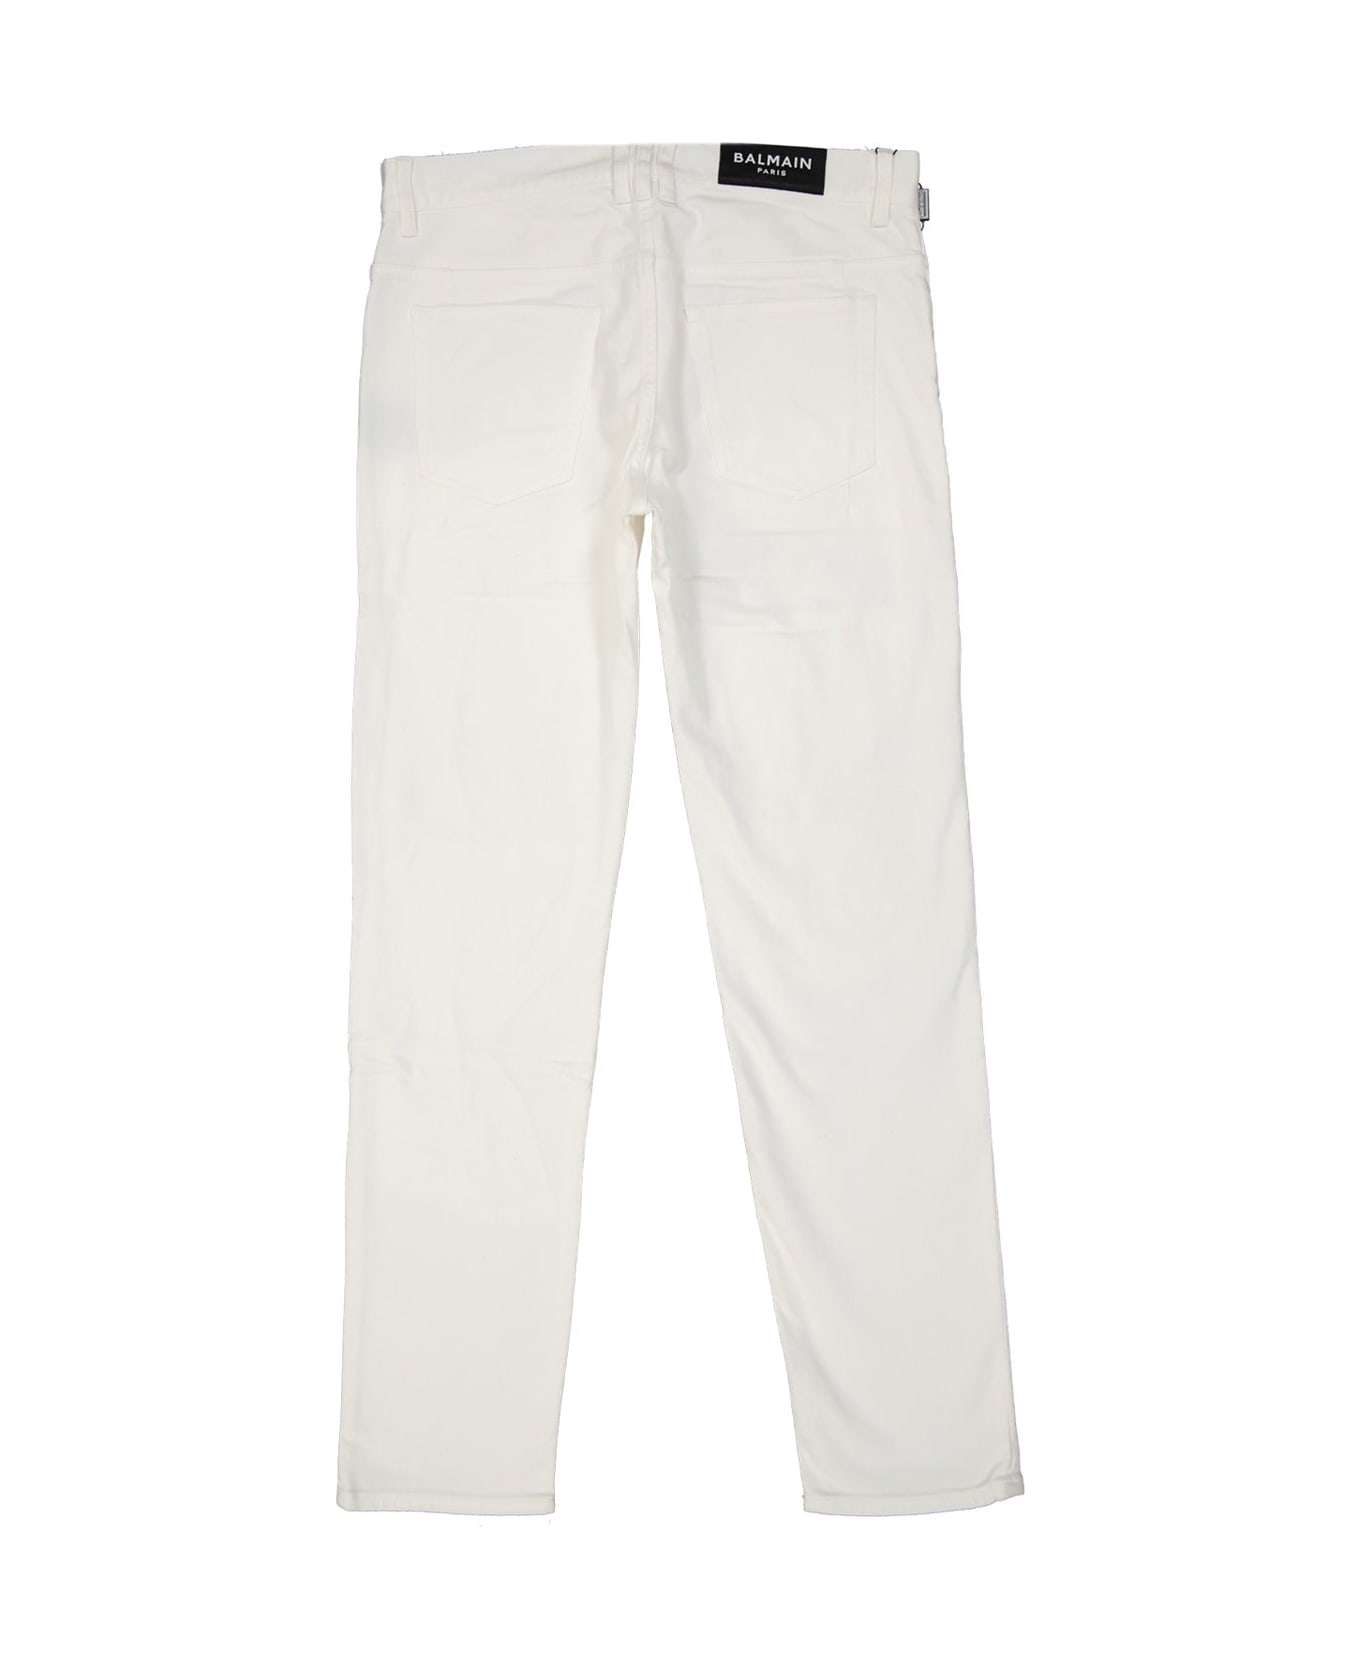 Balmain Cotton Denim Jeans - White ボトムス